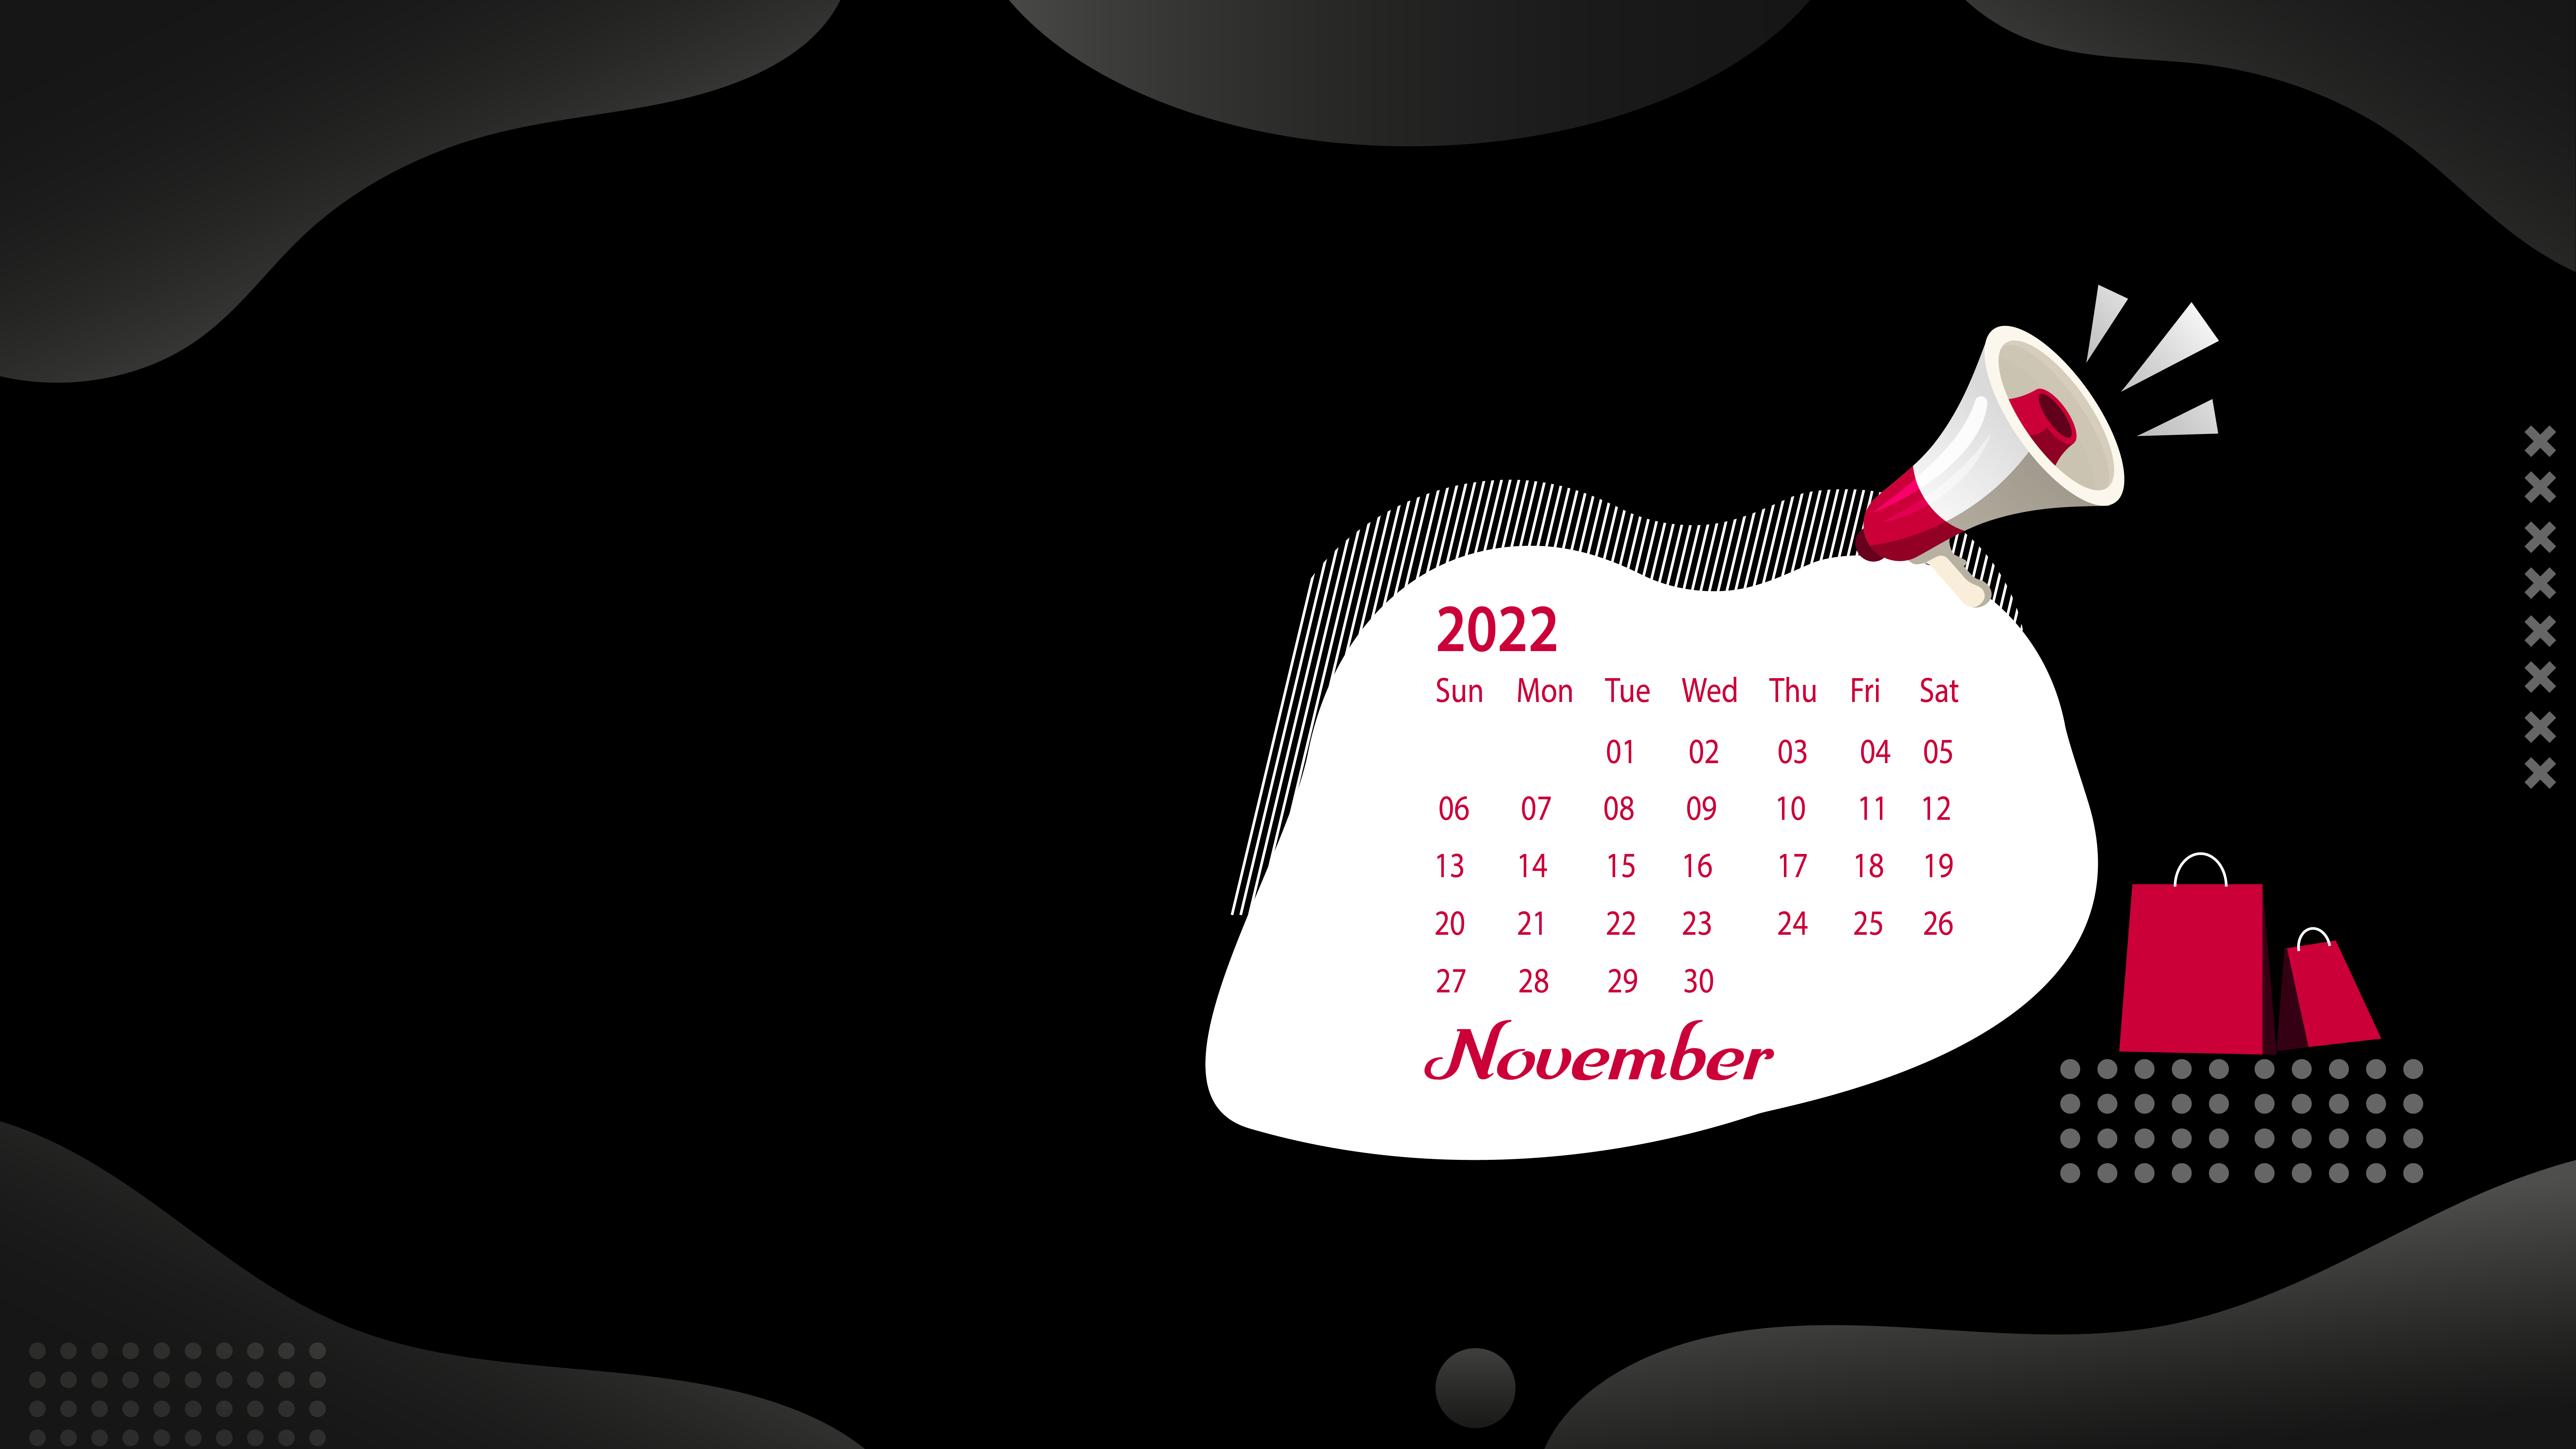 December 2022 Christmas Calendar Green Christmas Trees and Fireworks 4K  wallpaper download